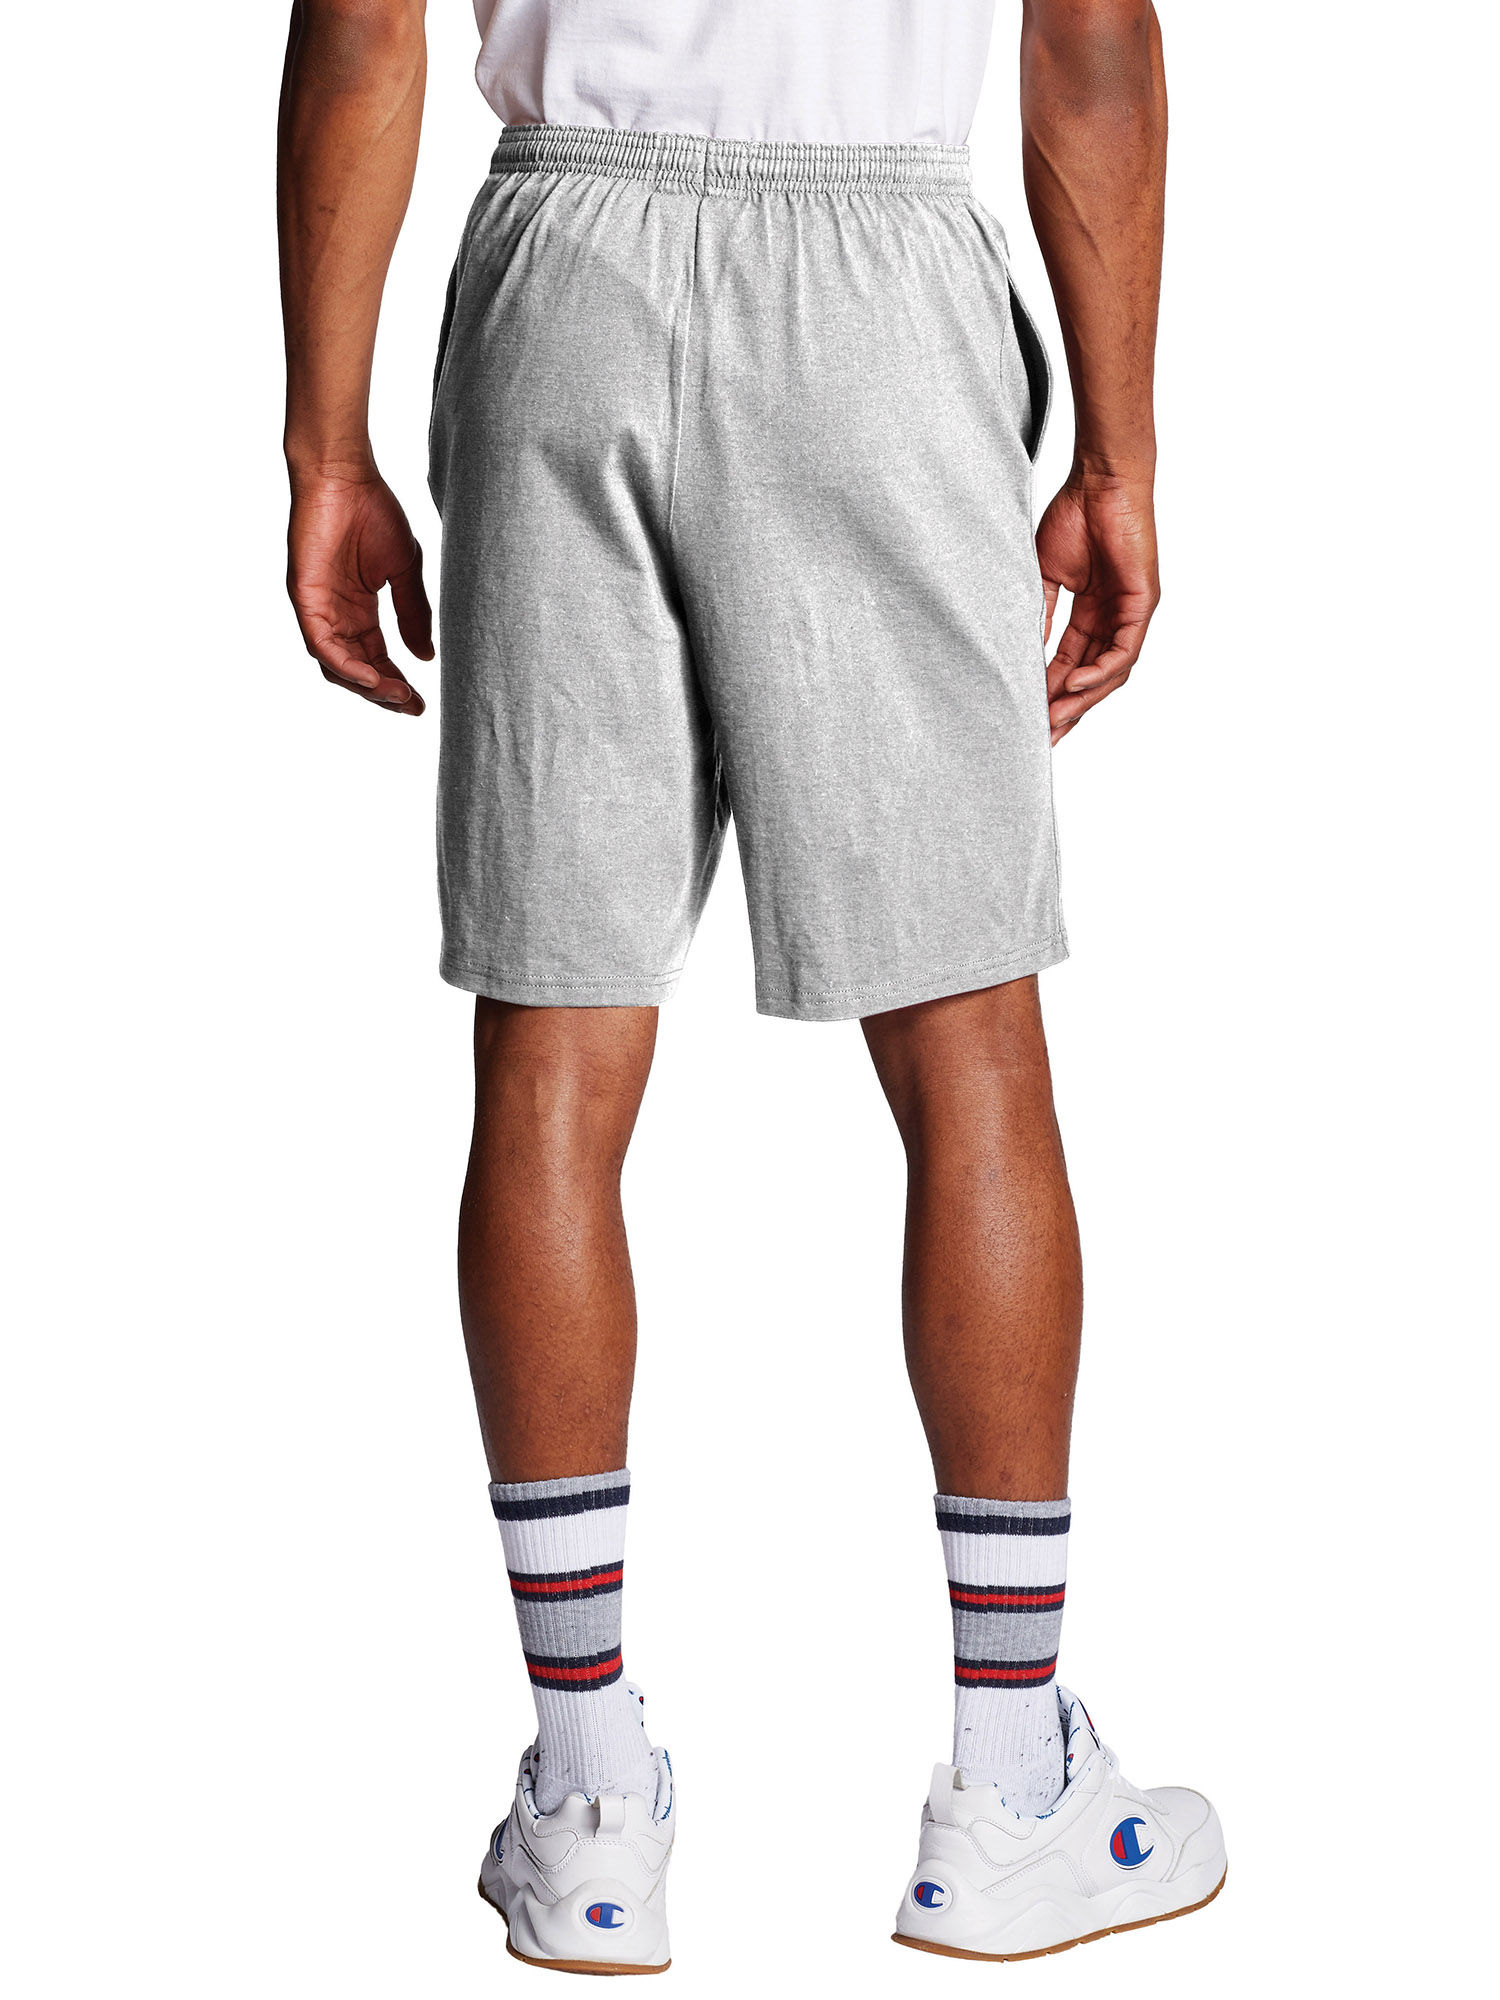 Champion Authentic Cotton 9-Inch Men's Shorts with Pockets - Walmart.com